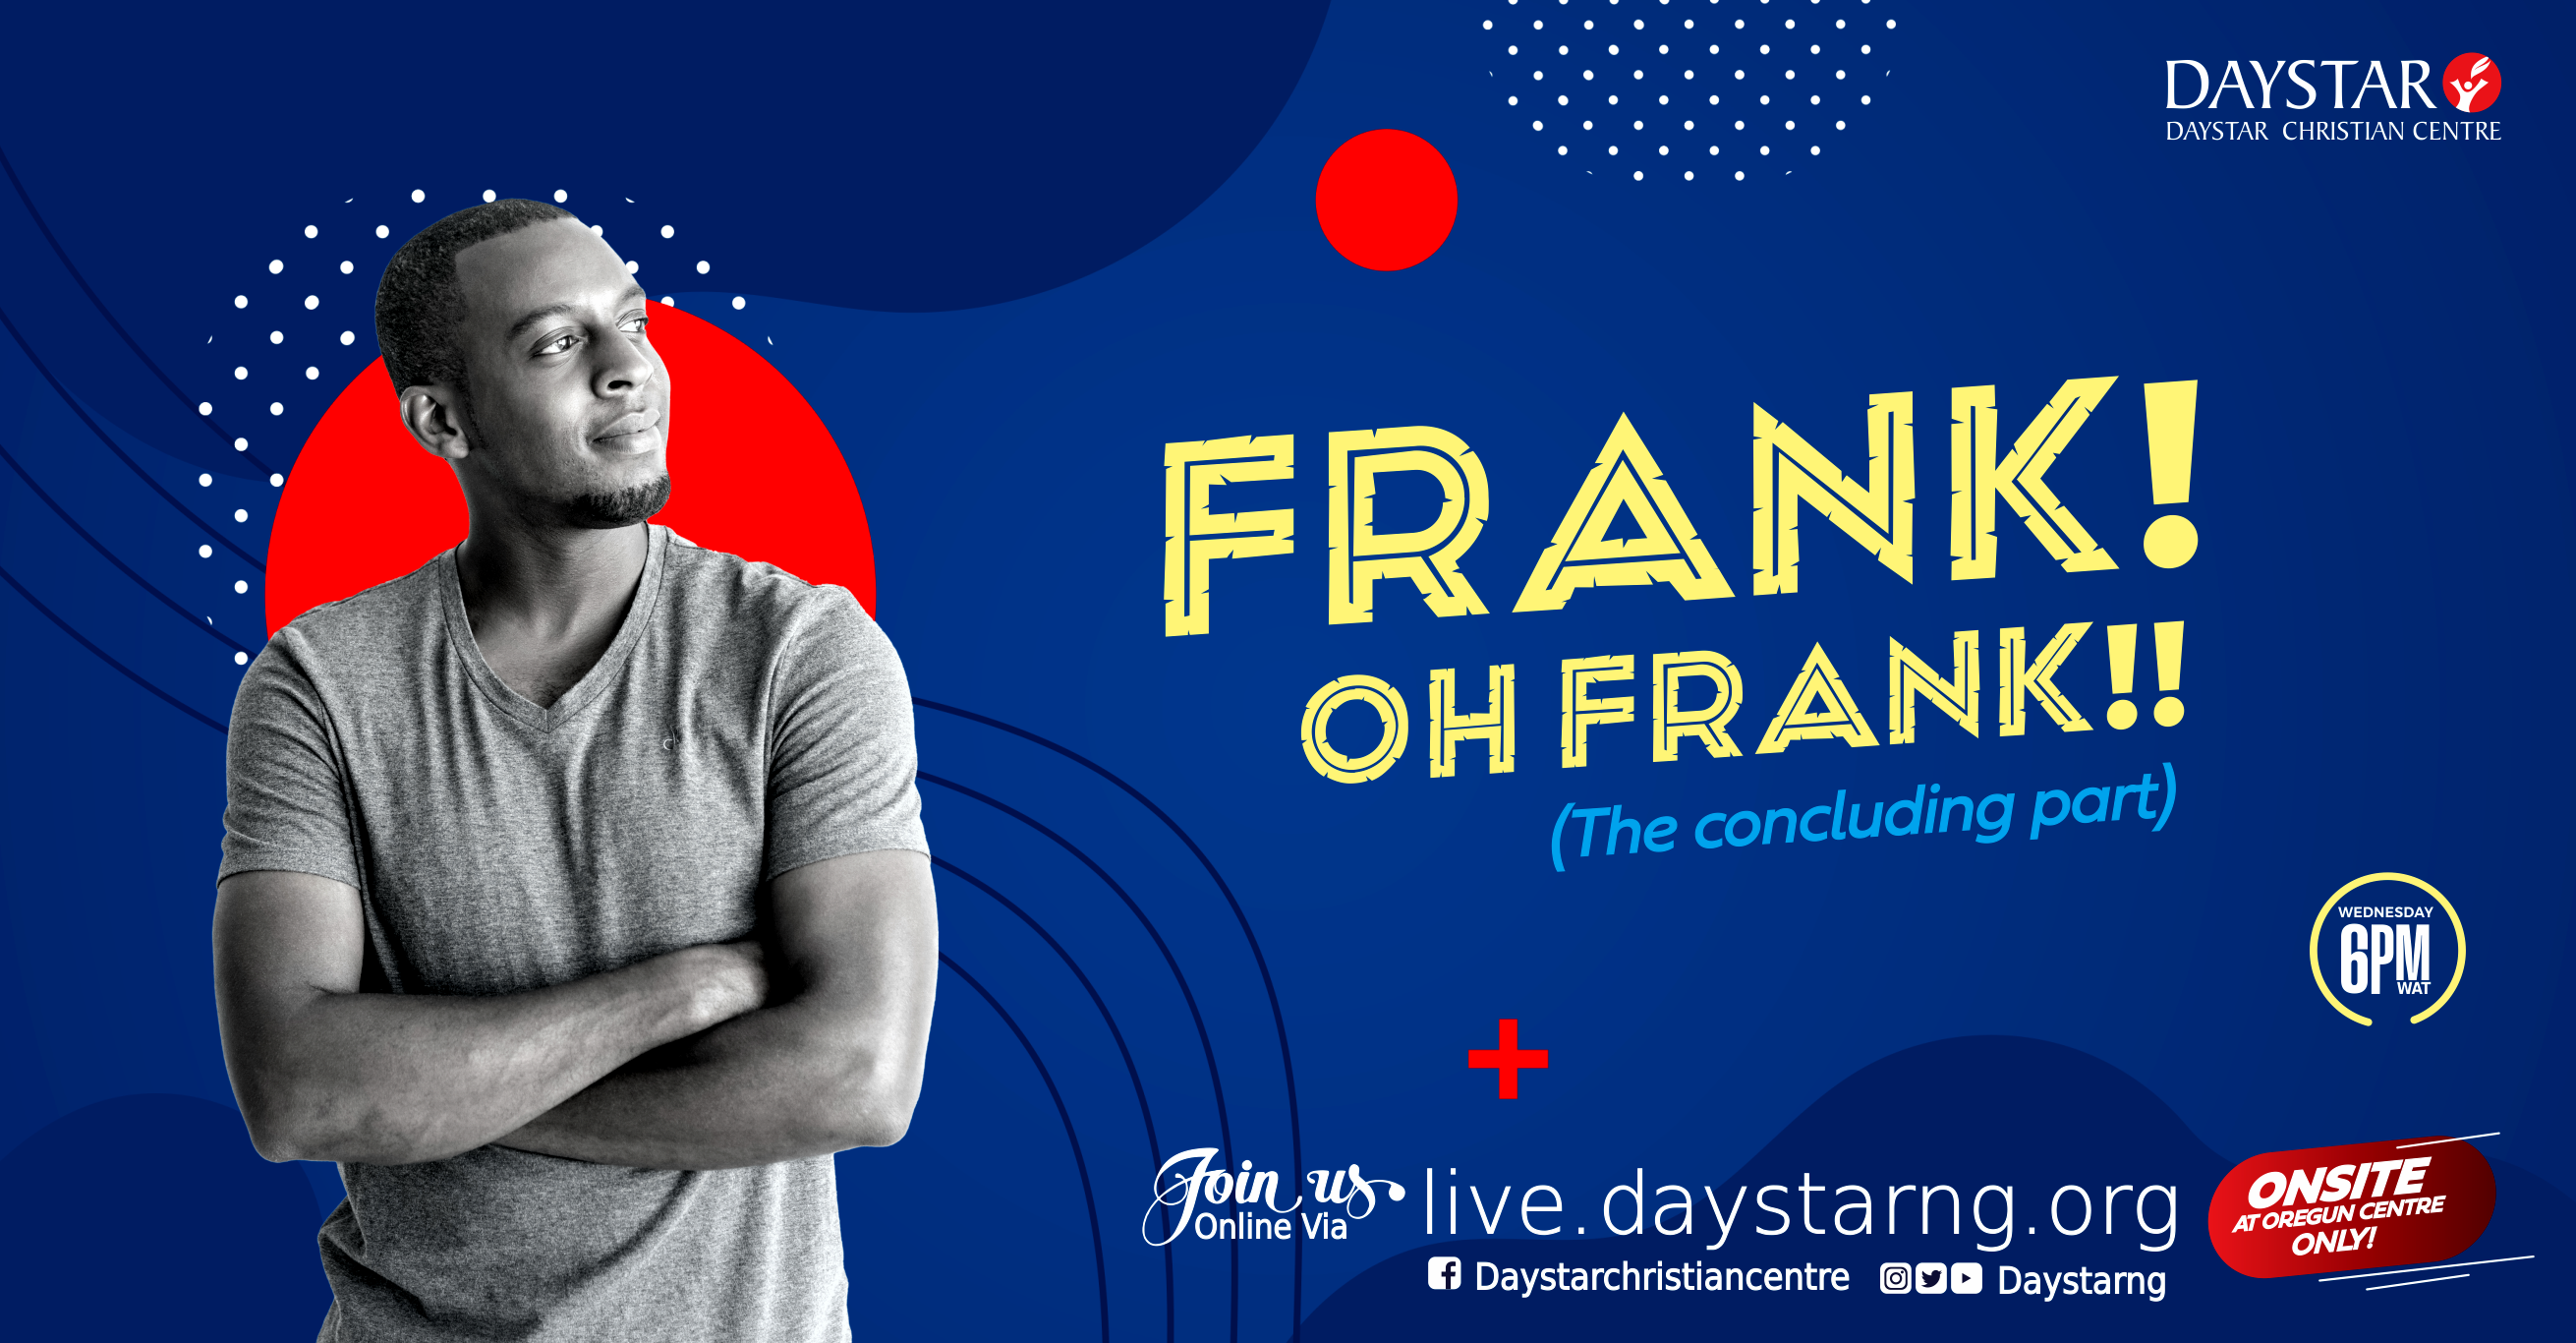 Frank, oh Frank! - The Quest | Daystar Online | Daystar Christian Centre